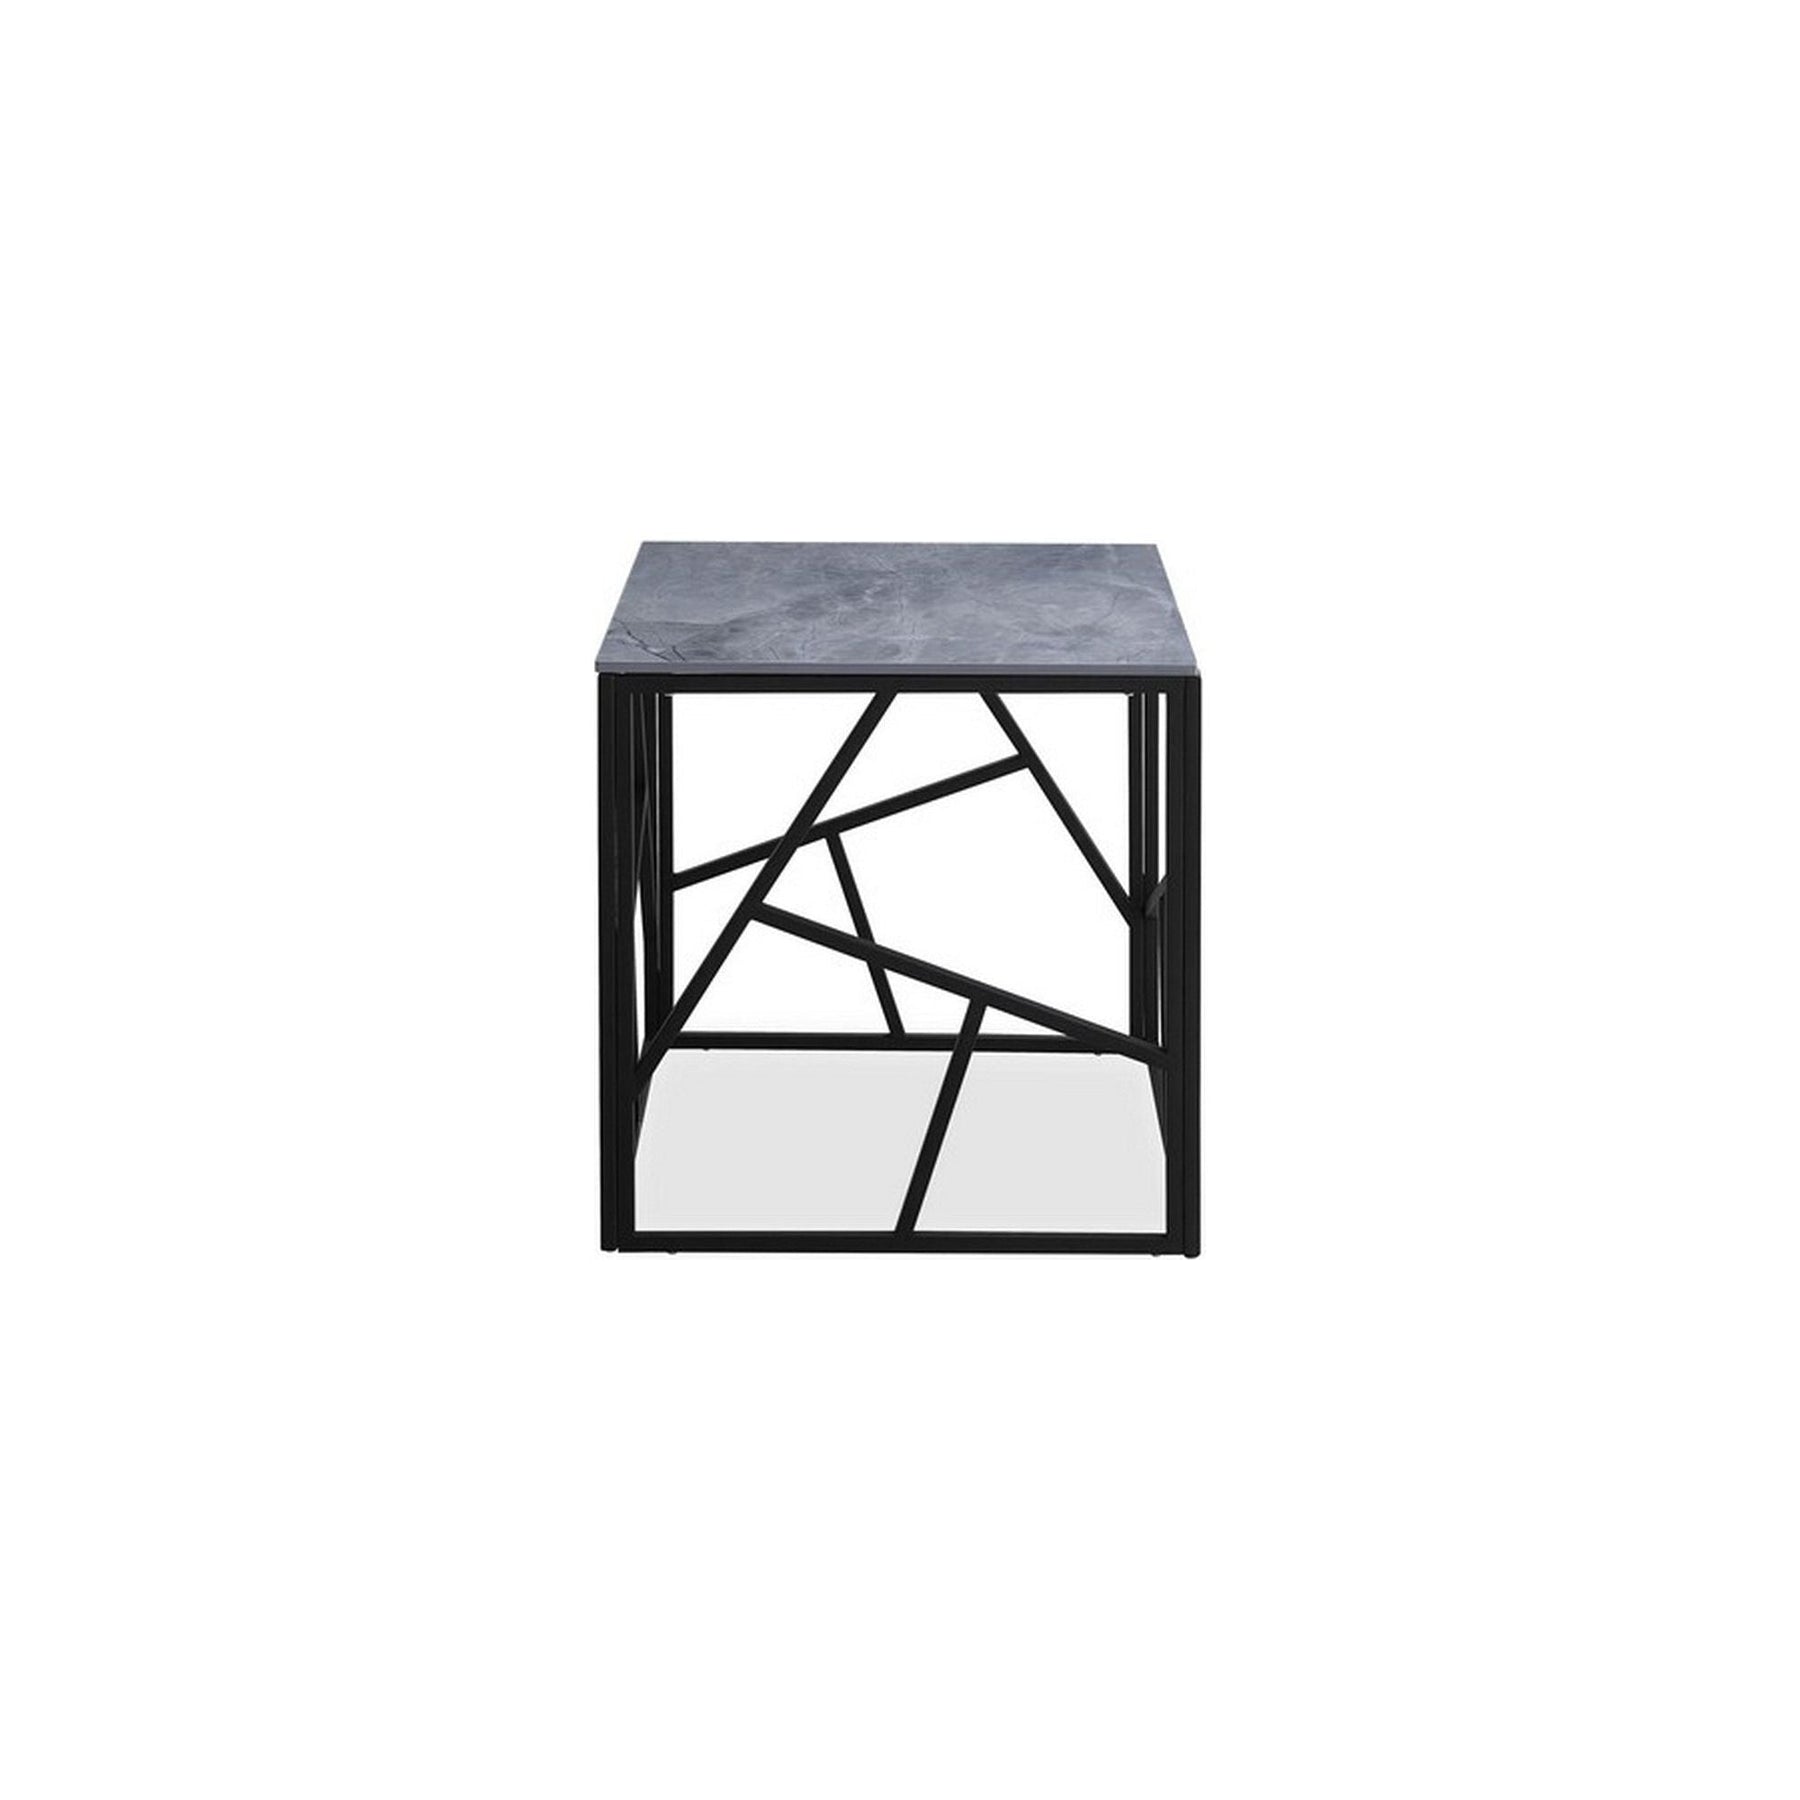 Masuta cafea UNIVERSE 2, gri/negru, ceramica/metal, 55x55x55 cm